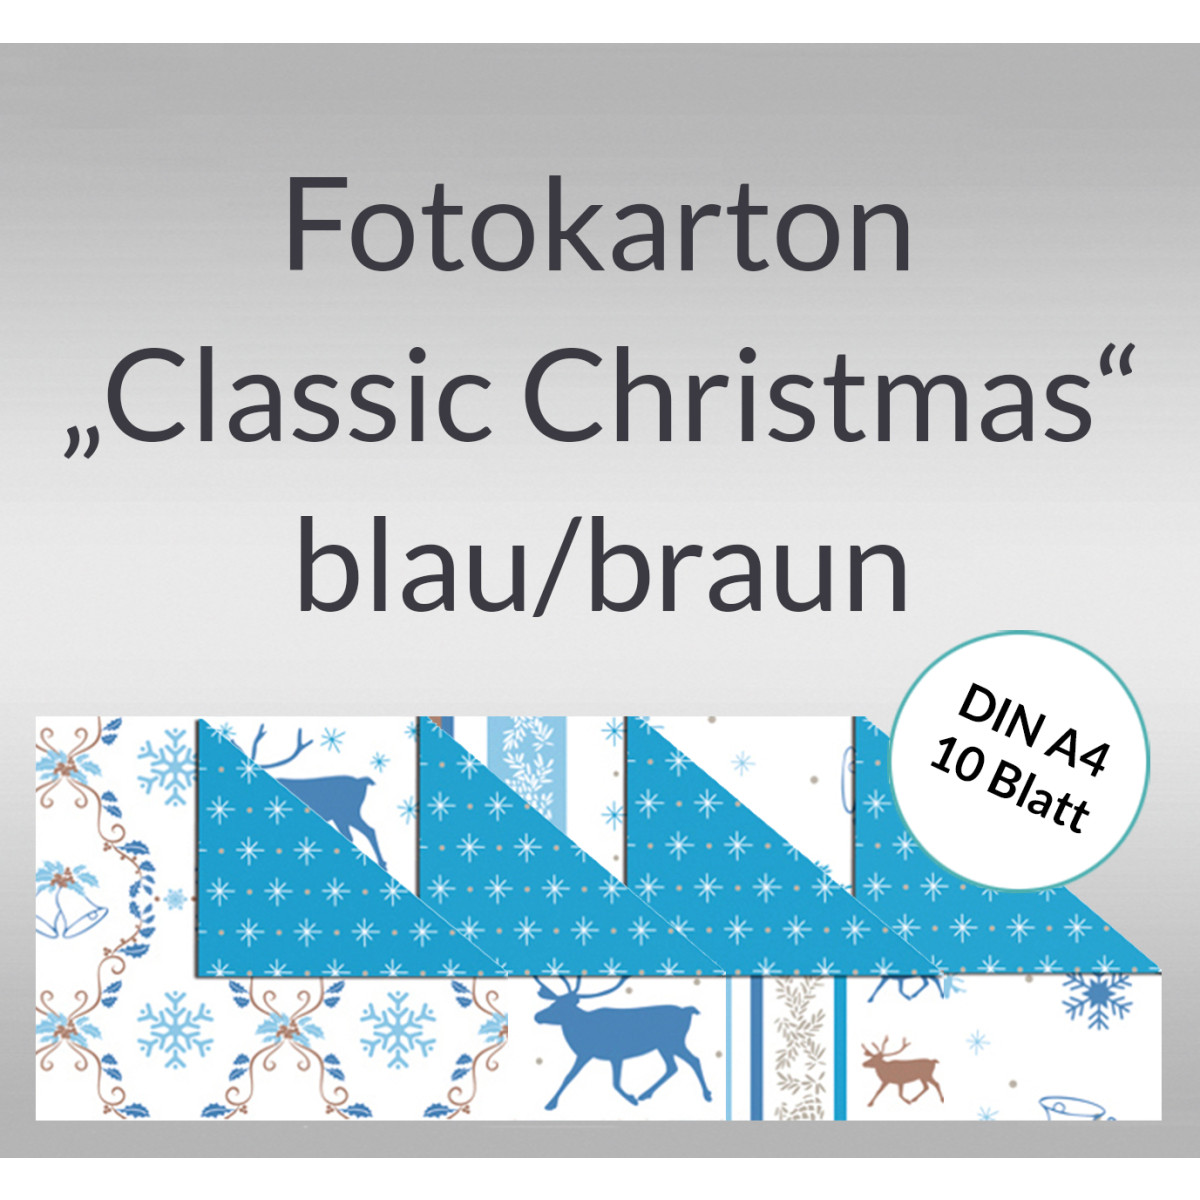 Fotokarton "Classic Christmas" blau/braun DIN A4 - 10 Blatt